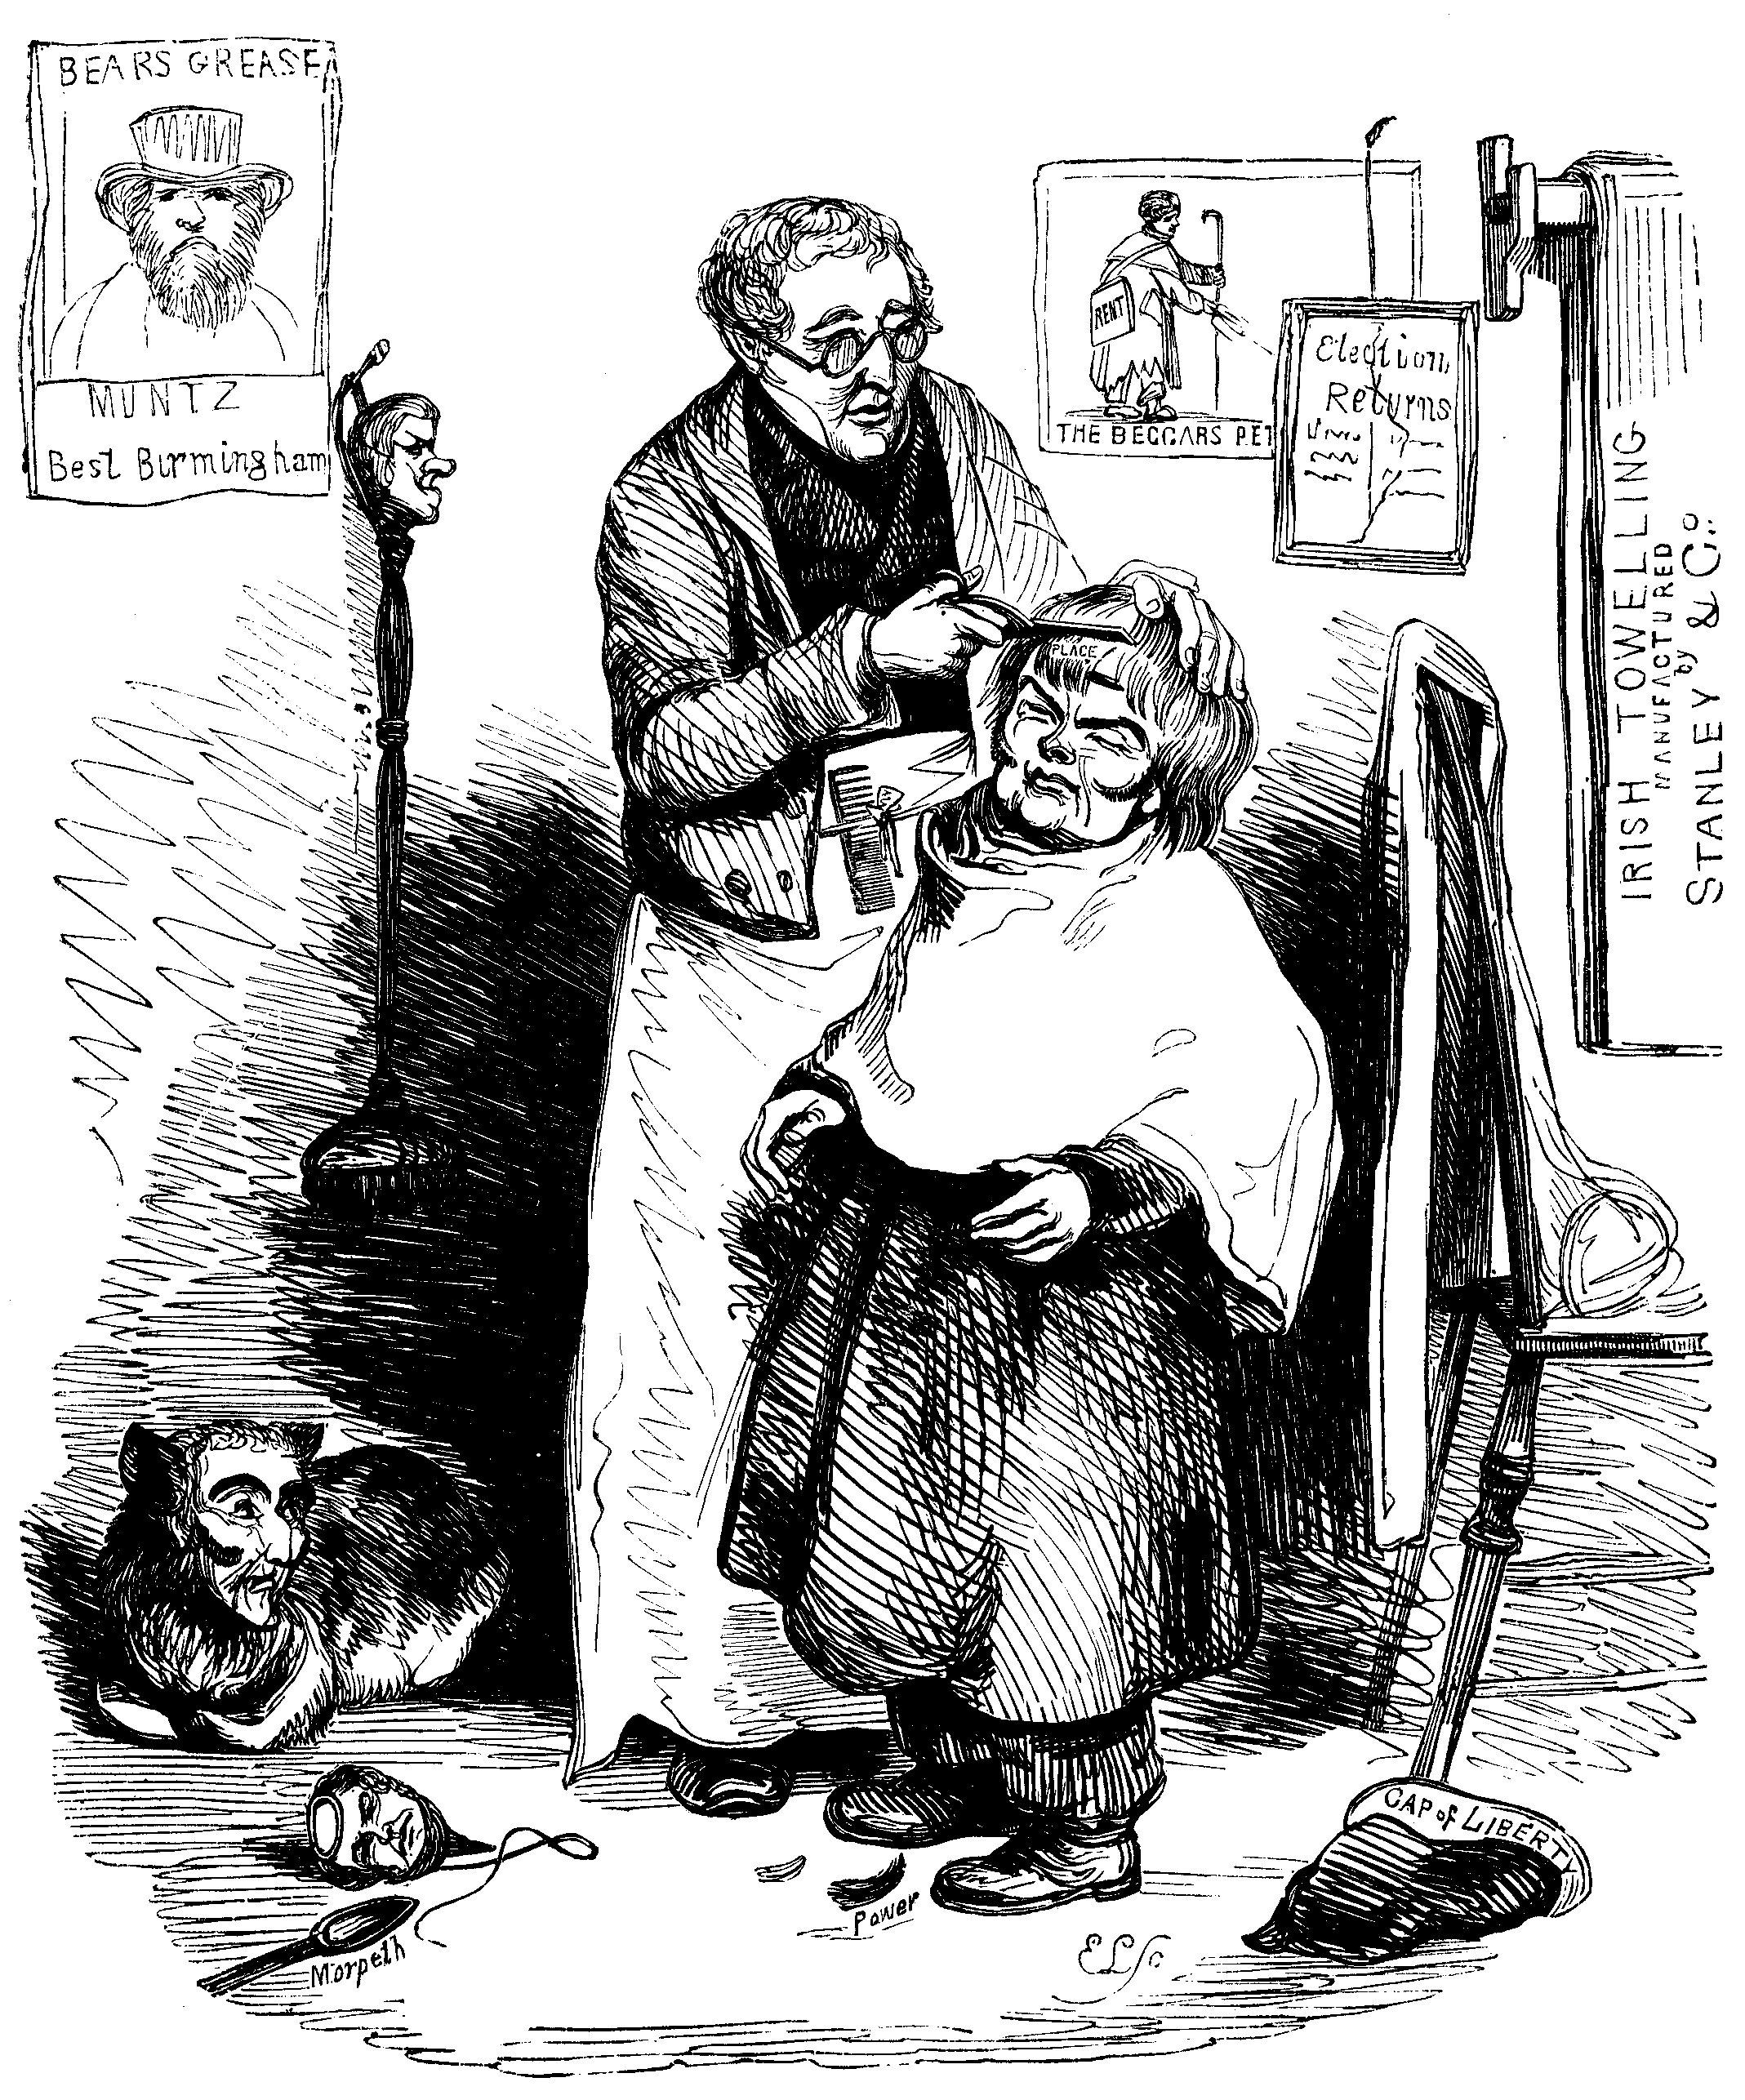 A man gives a smaller man a haircut.